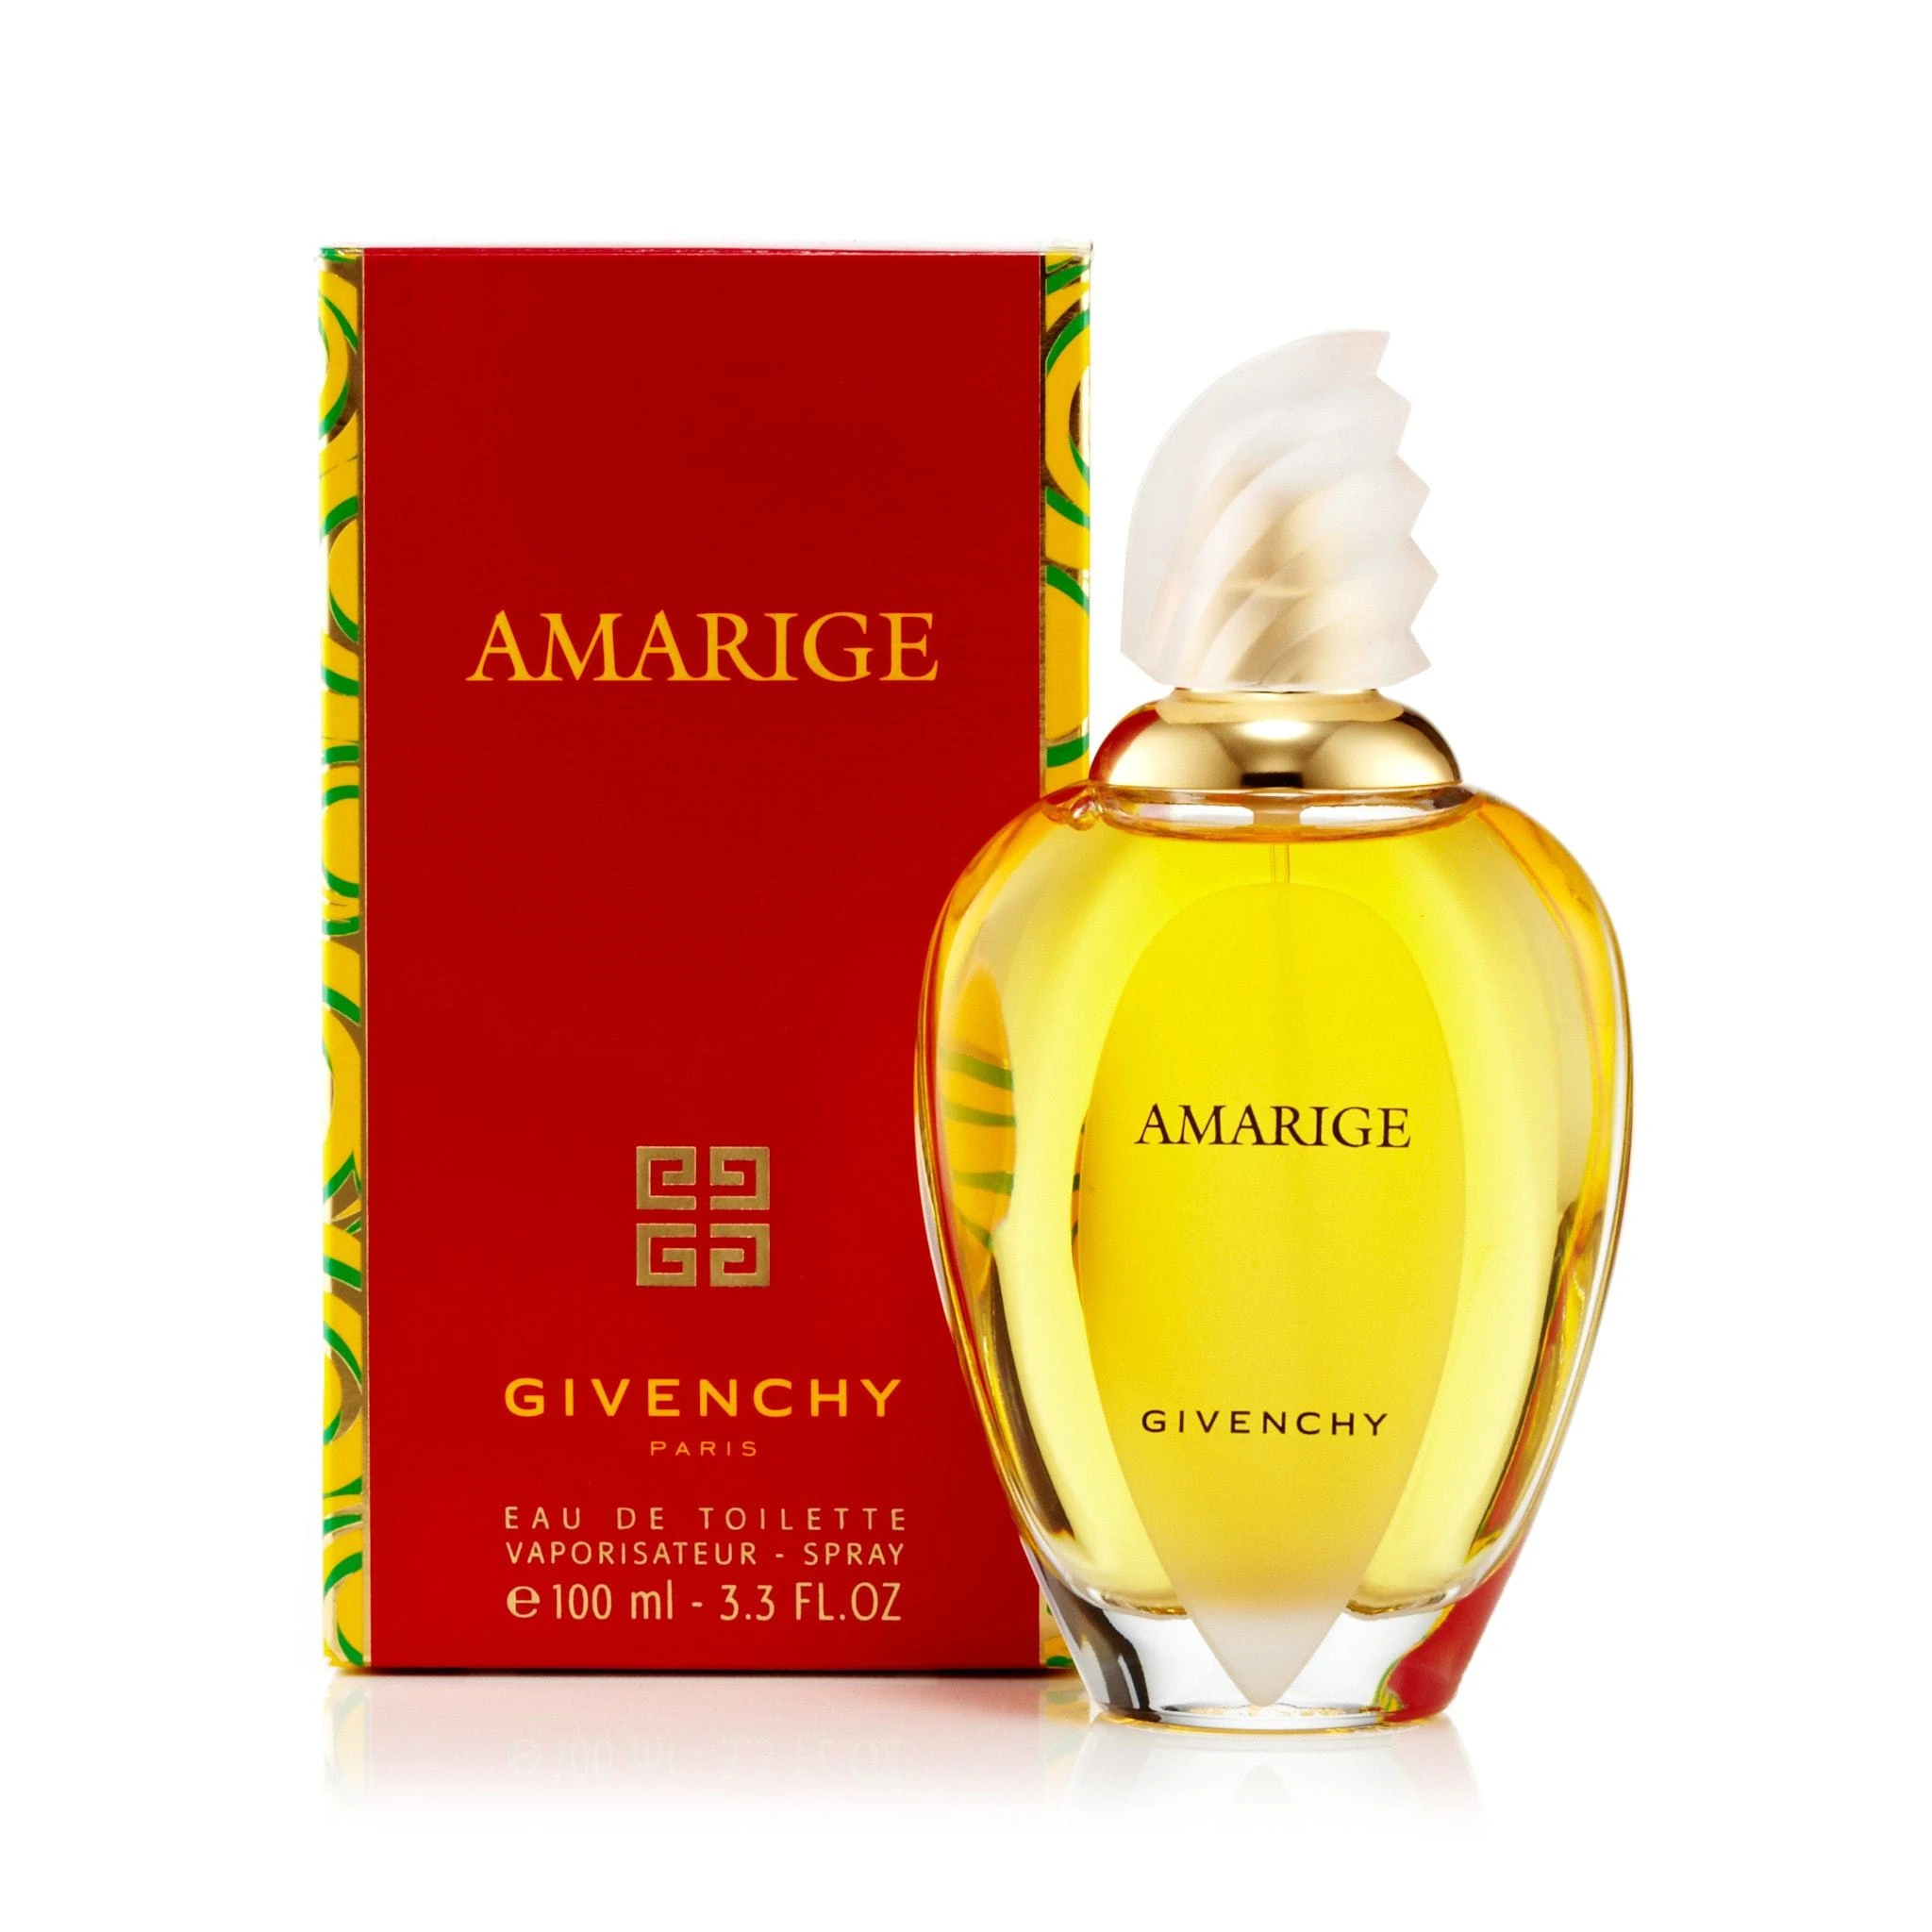 amarige perfume review